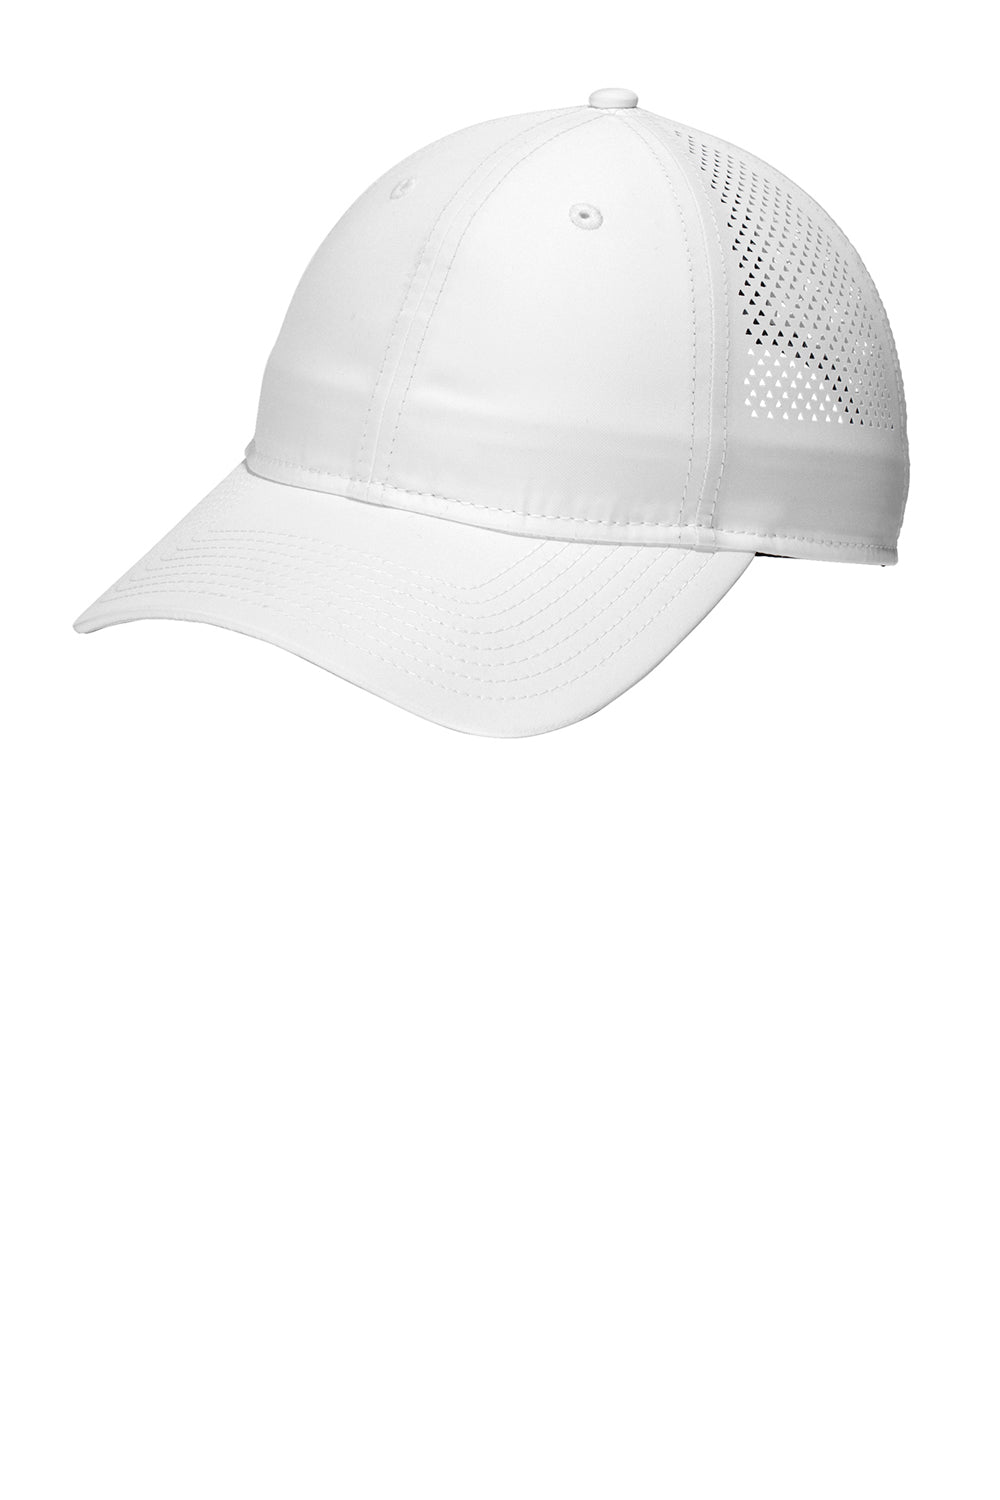 New Era NE406 Mens Adjustable Hat White Front